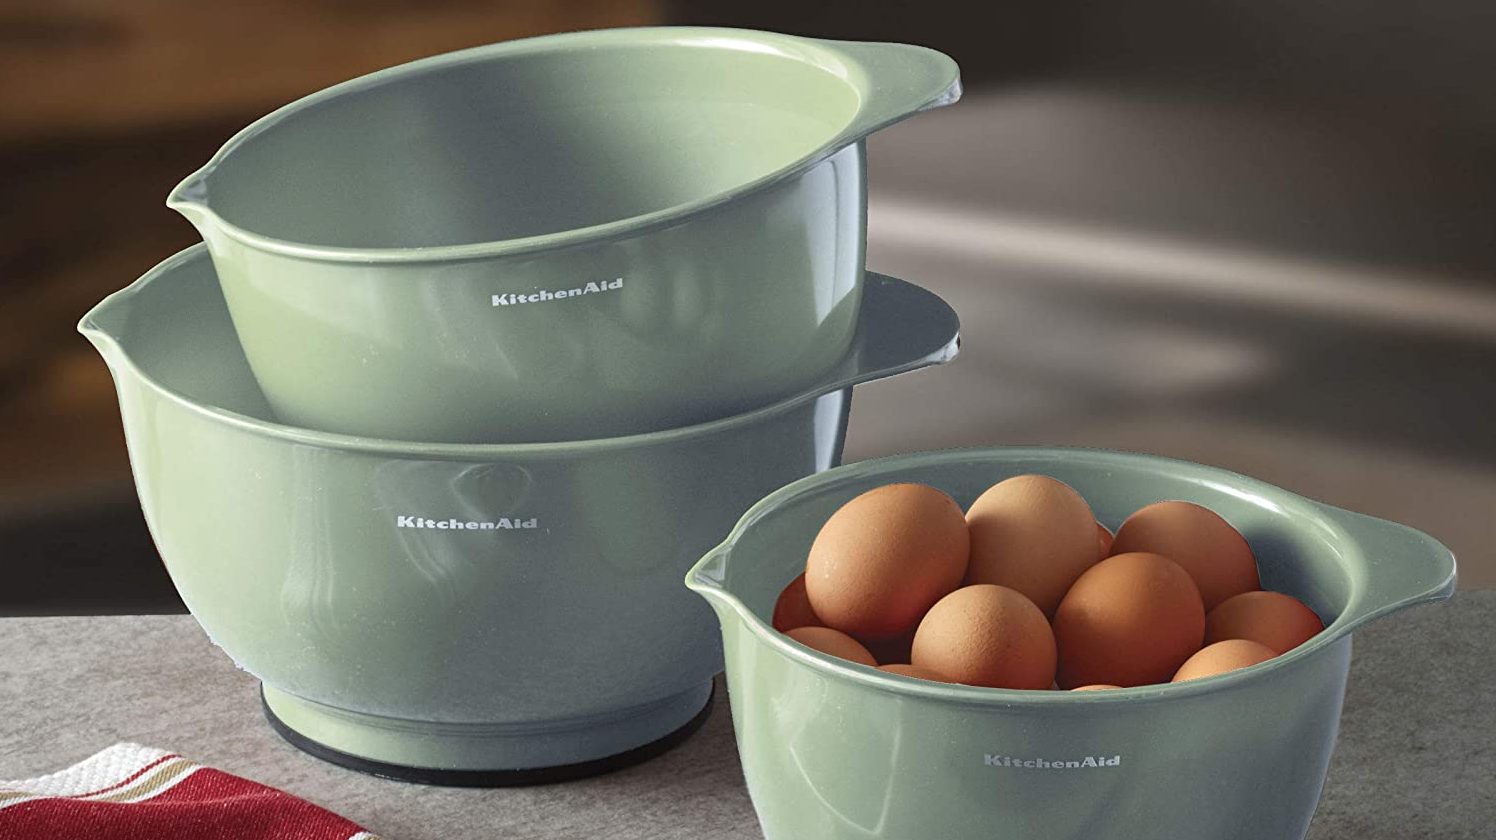 KitchenAid Set of 3 Mixing Bowls - Pistachio